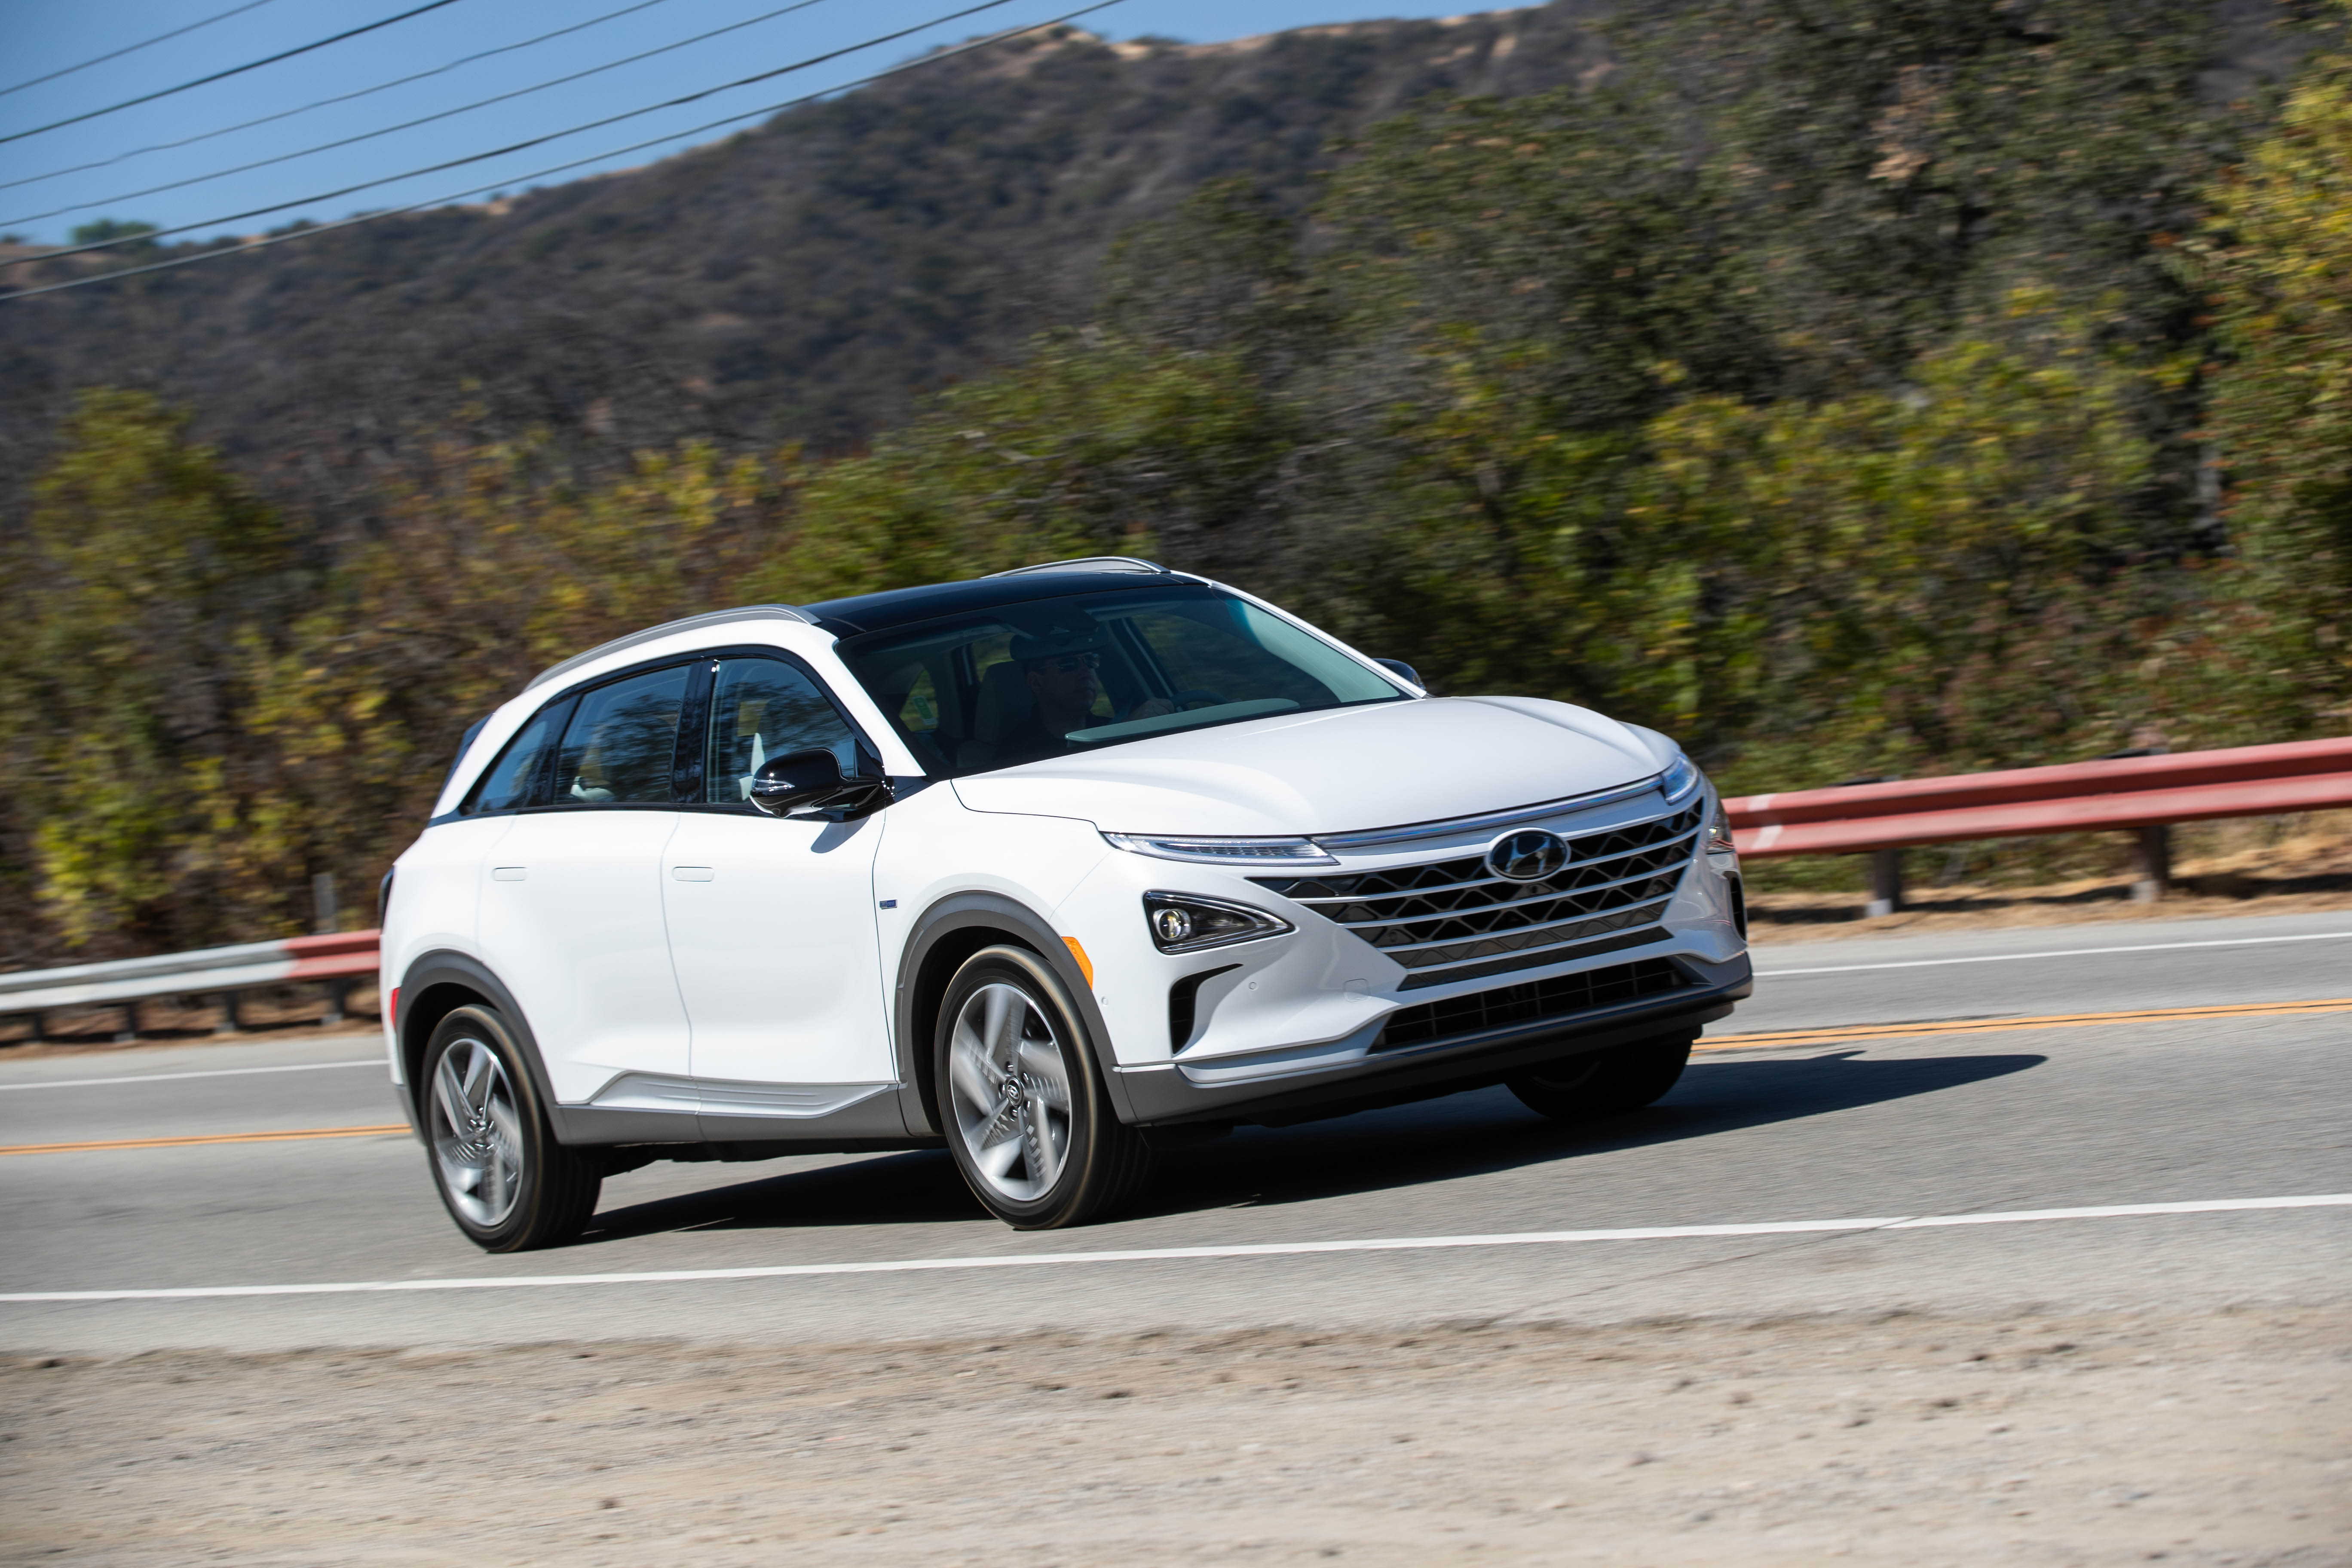 2019 Hyundai NEXO: The Next-Generation Fuel Cell SUV